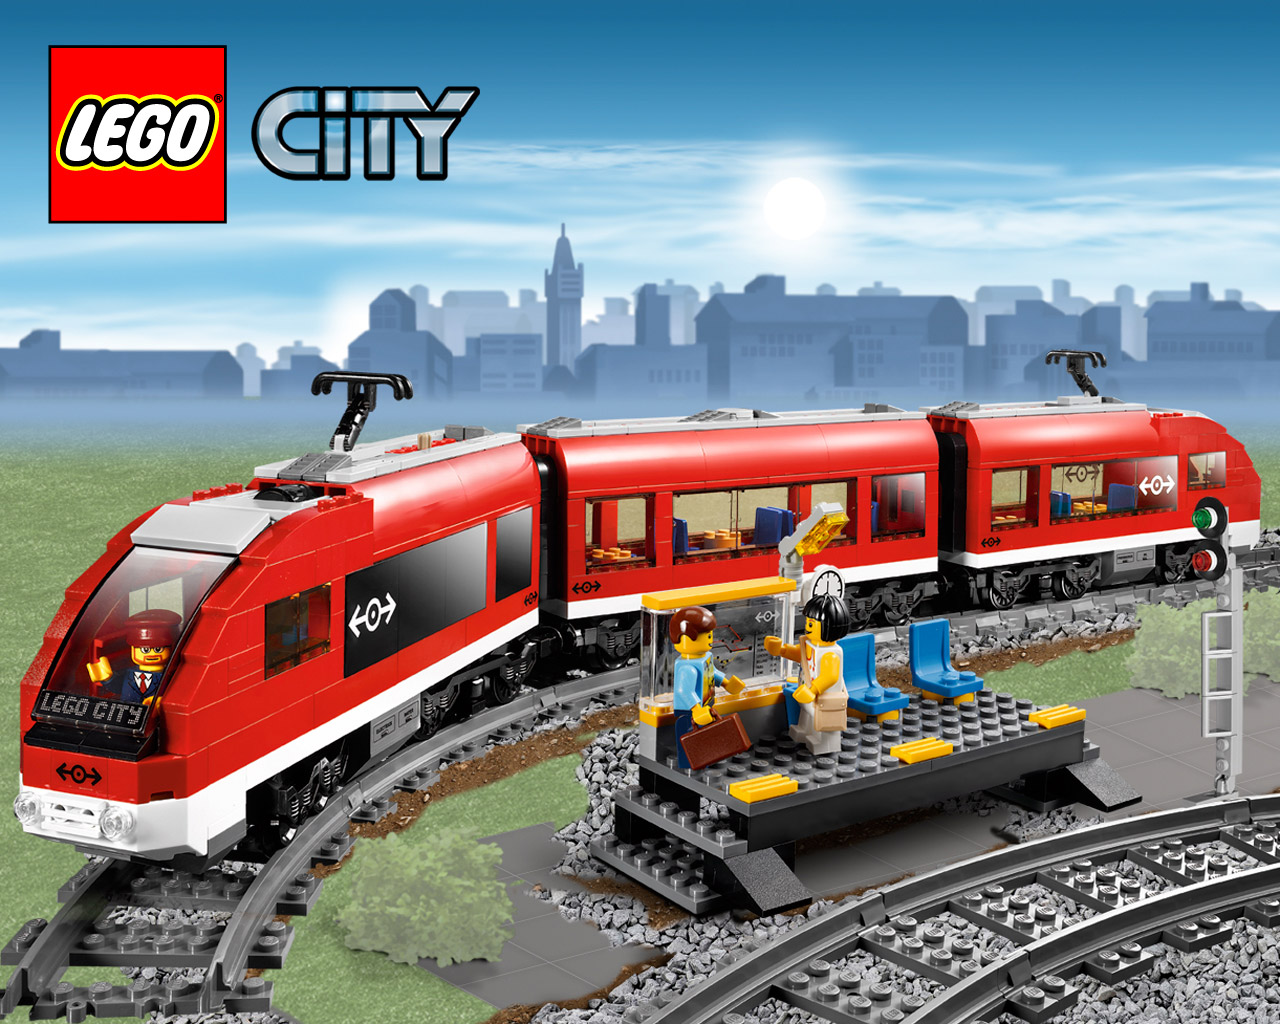 47+ LEGO City Wallpaper on WallpaperSafari